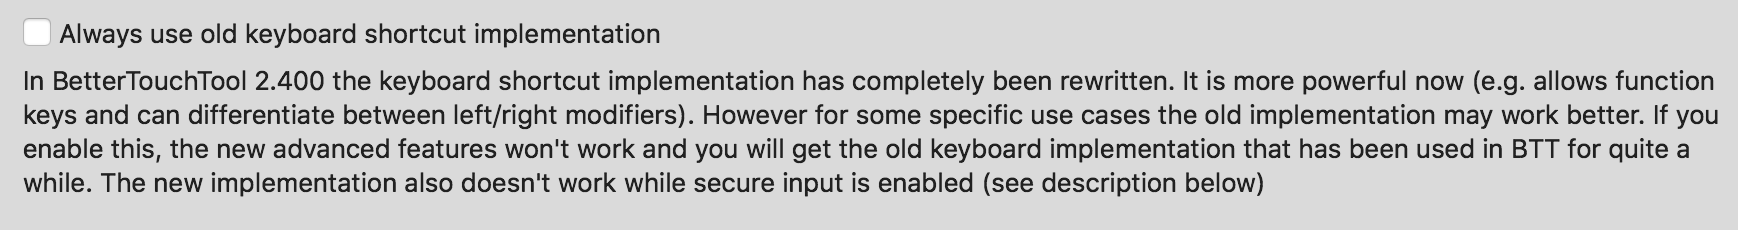 keyboard implementation note